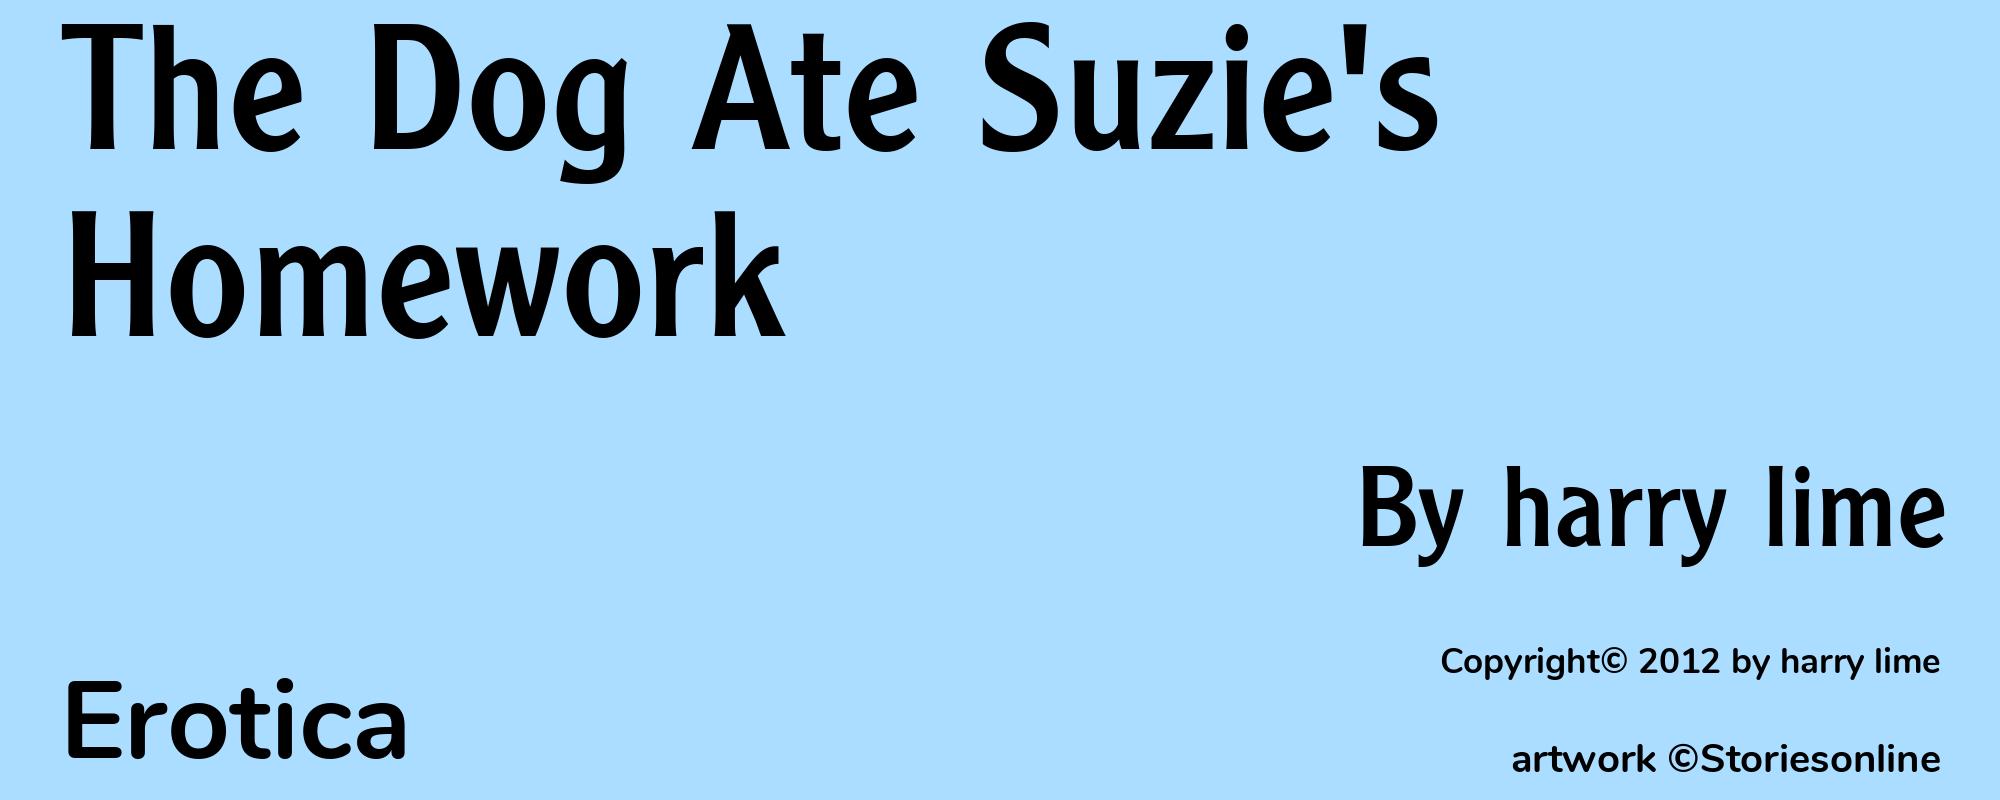 The Dog Ate Suzie's Homework - Cover